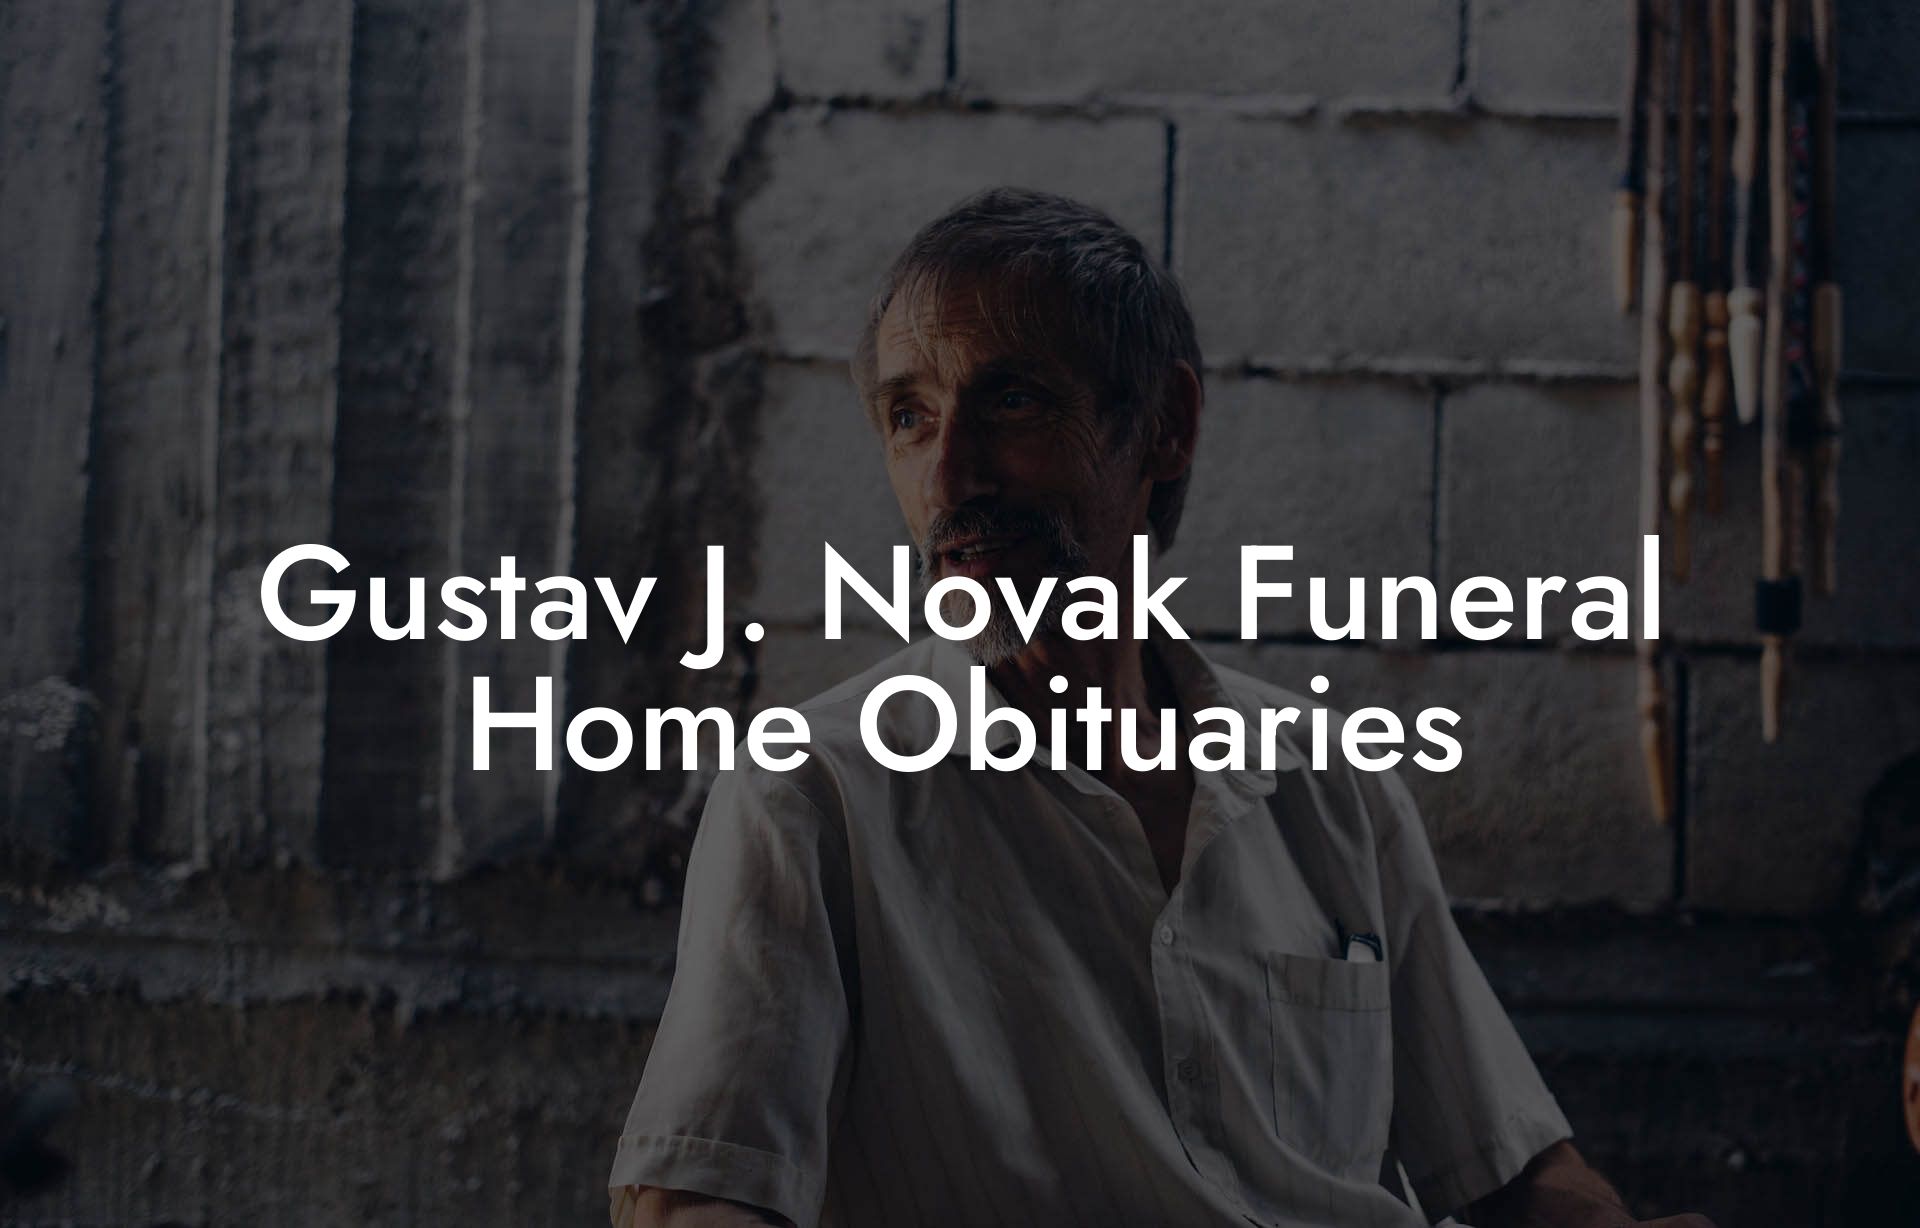 Gustav J. Novak Funeral Home Obituaries